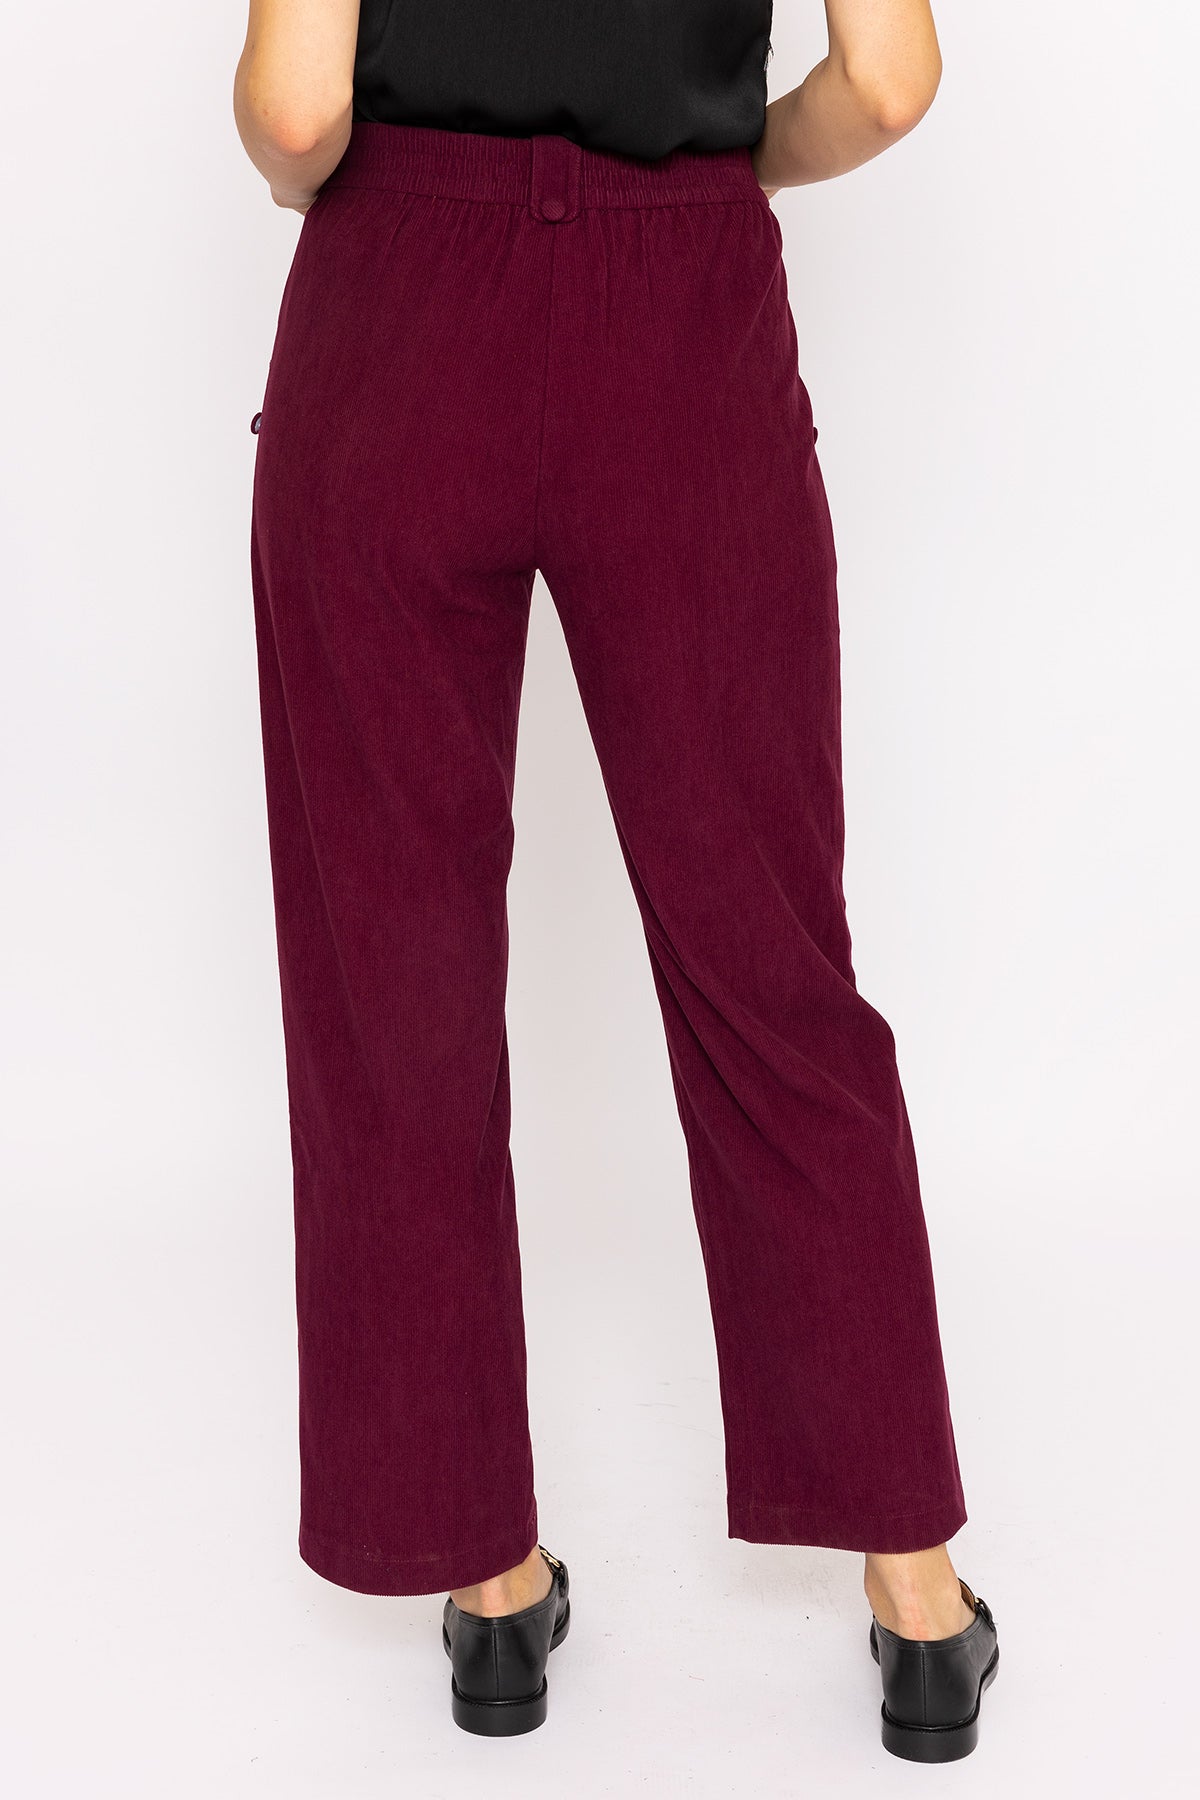 Buy Vintage Edwin Maroon Corduroy Trousers Womens W31 L25 Online in India -  Etsy